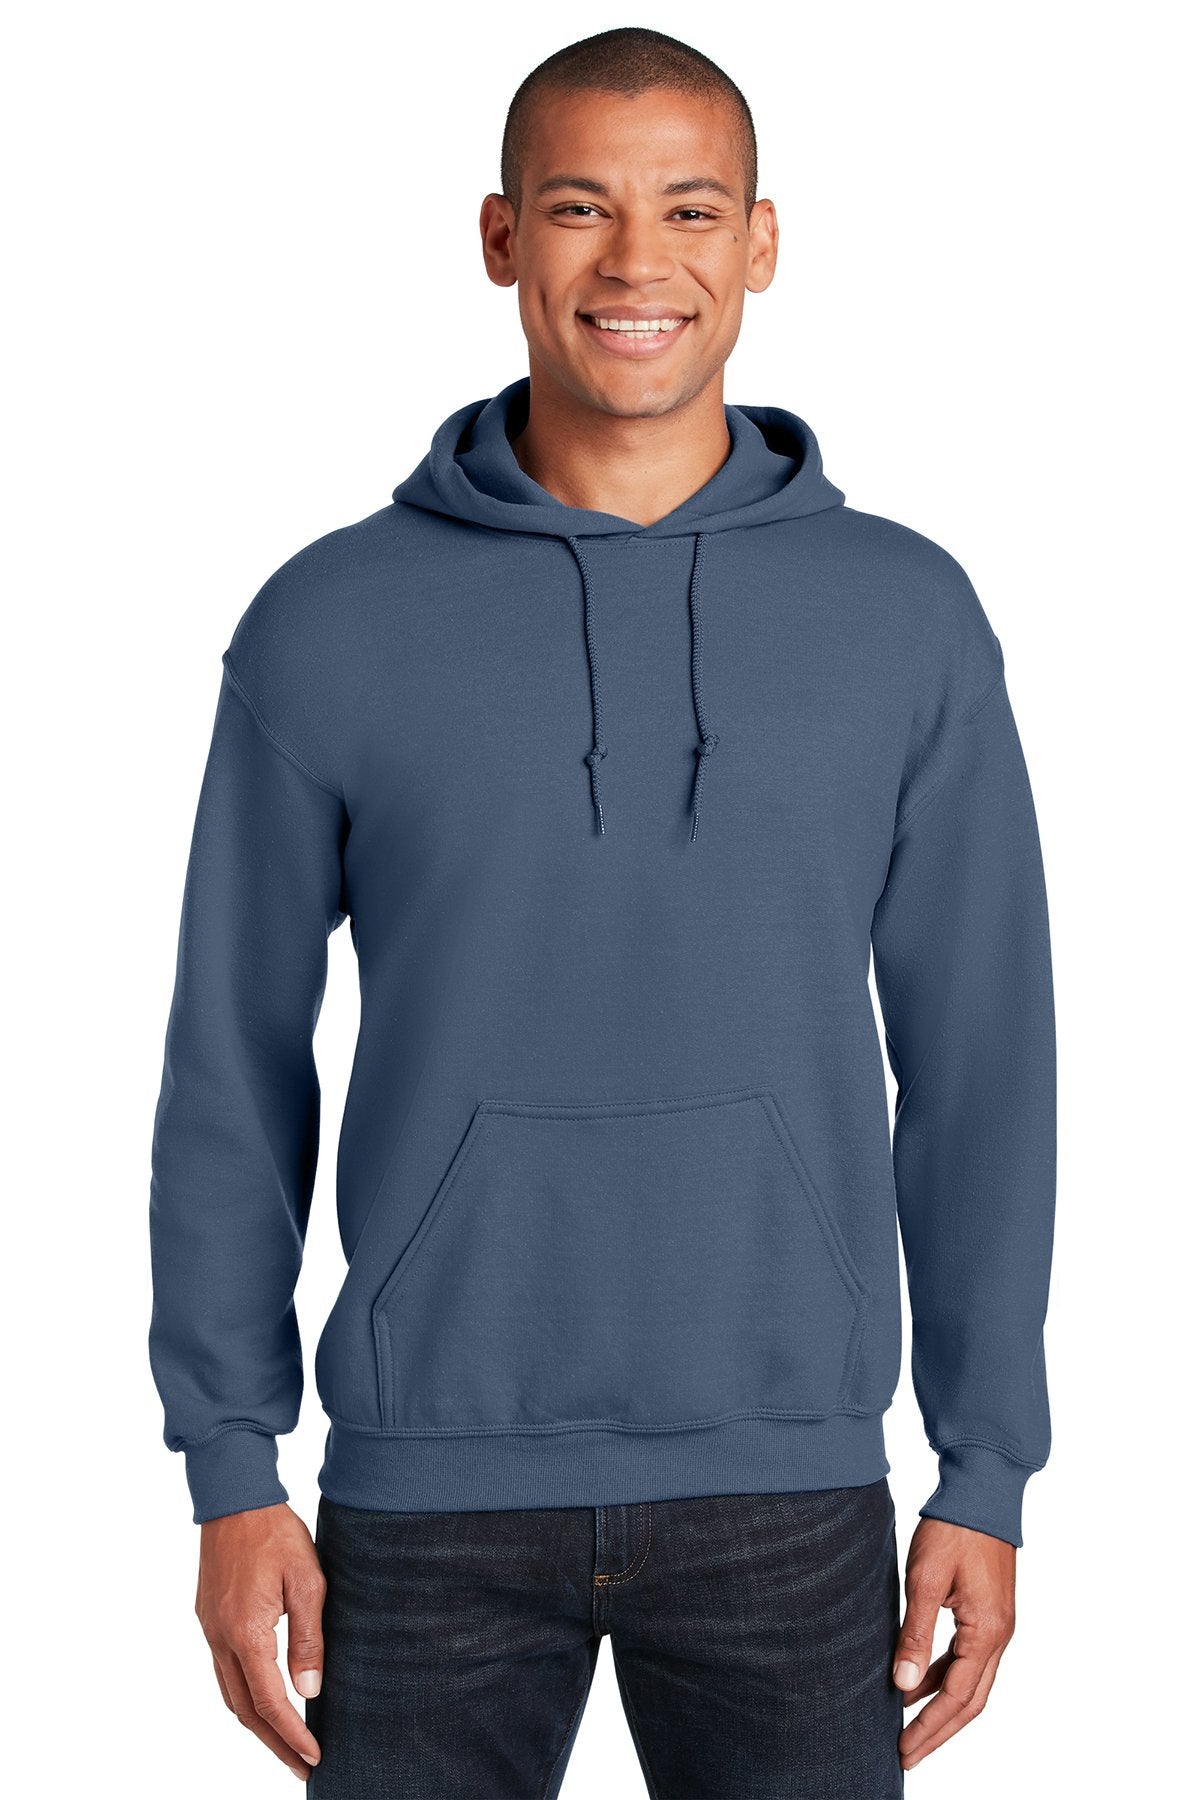 Gildan Indigo Blue 18500 business sweatshirts with logo